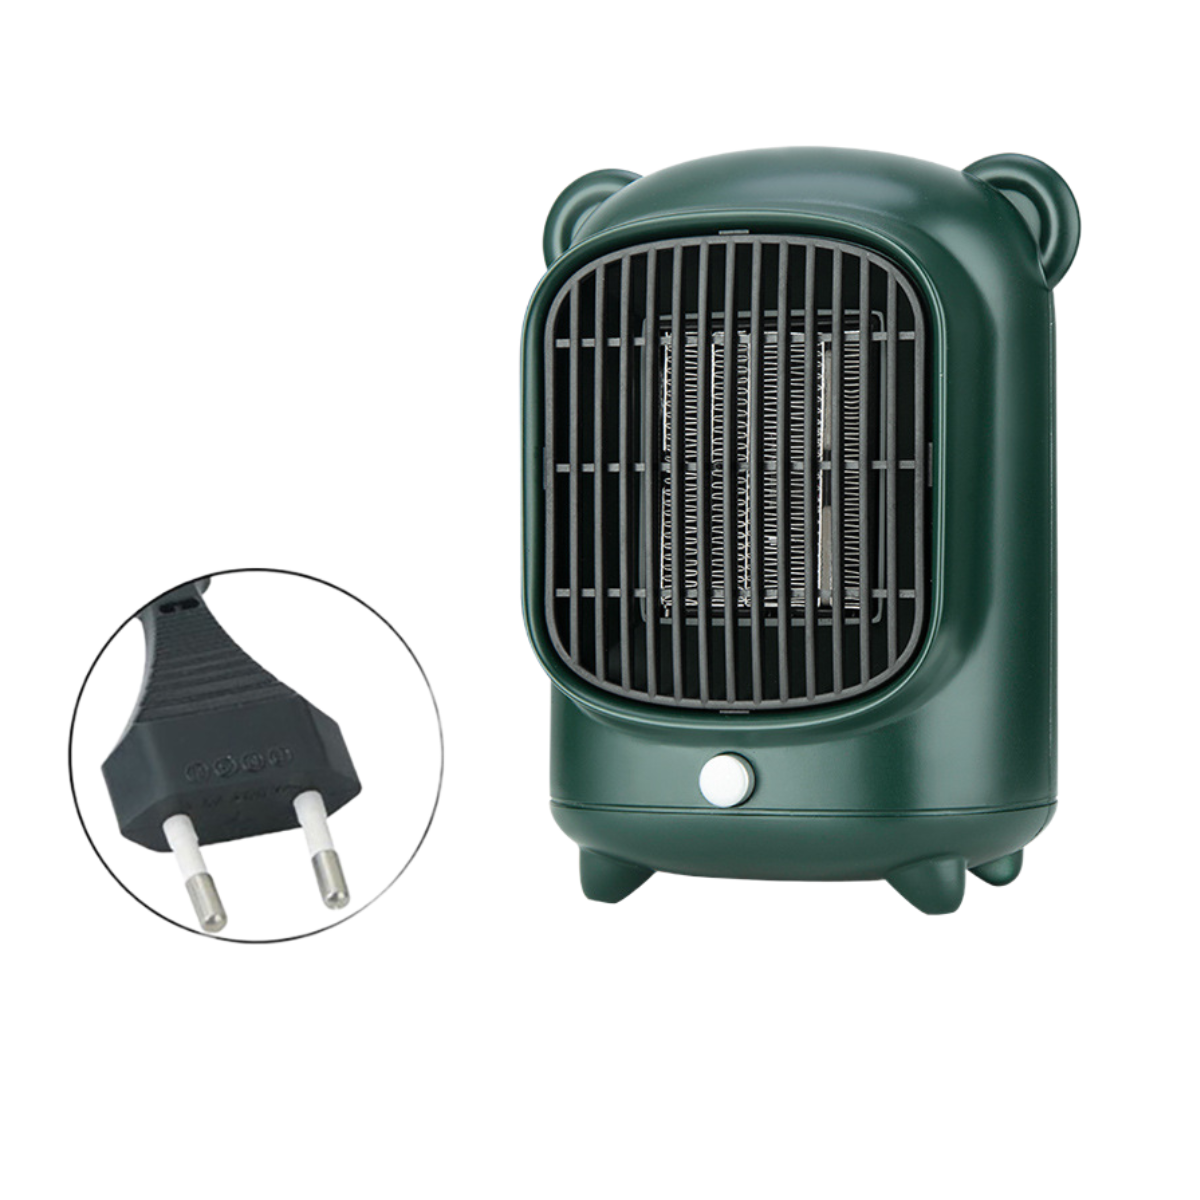 UWOT Bear Electric Heater-Green: PTC-Schnellheizung, leise (500 Watt) und Mini-Elektroheizung Ausschalten geräuscharm, sicheres